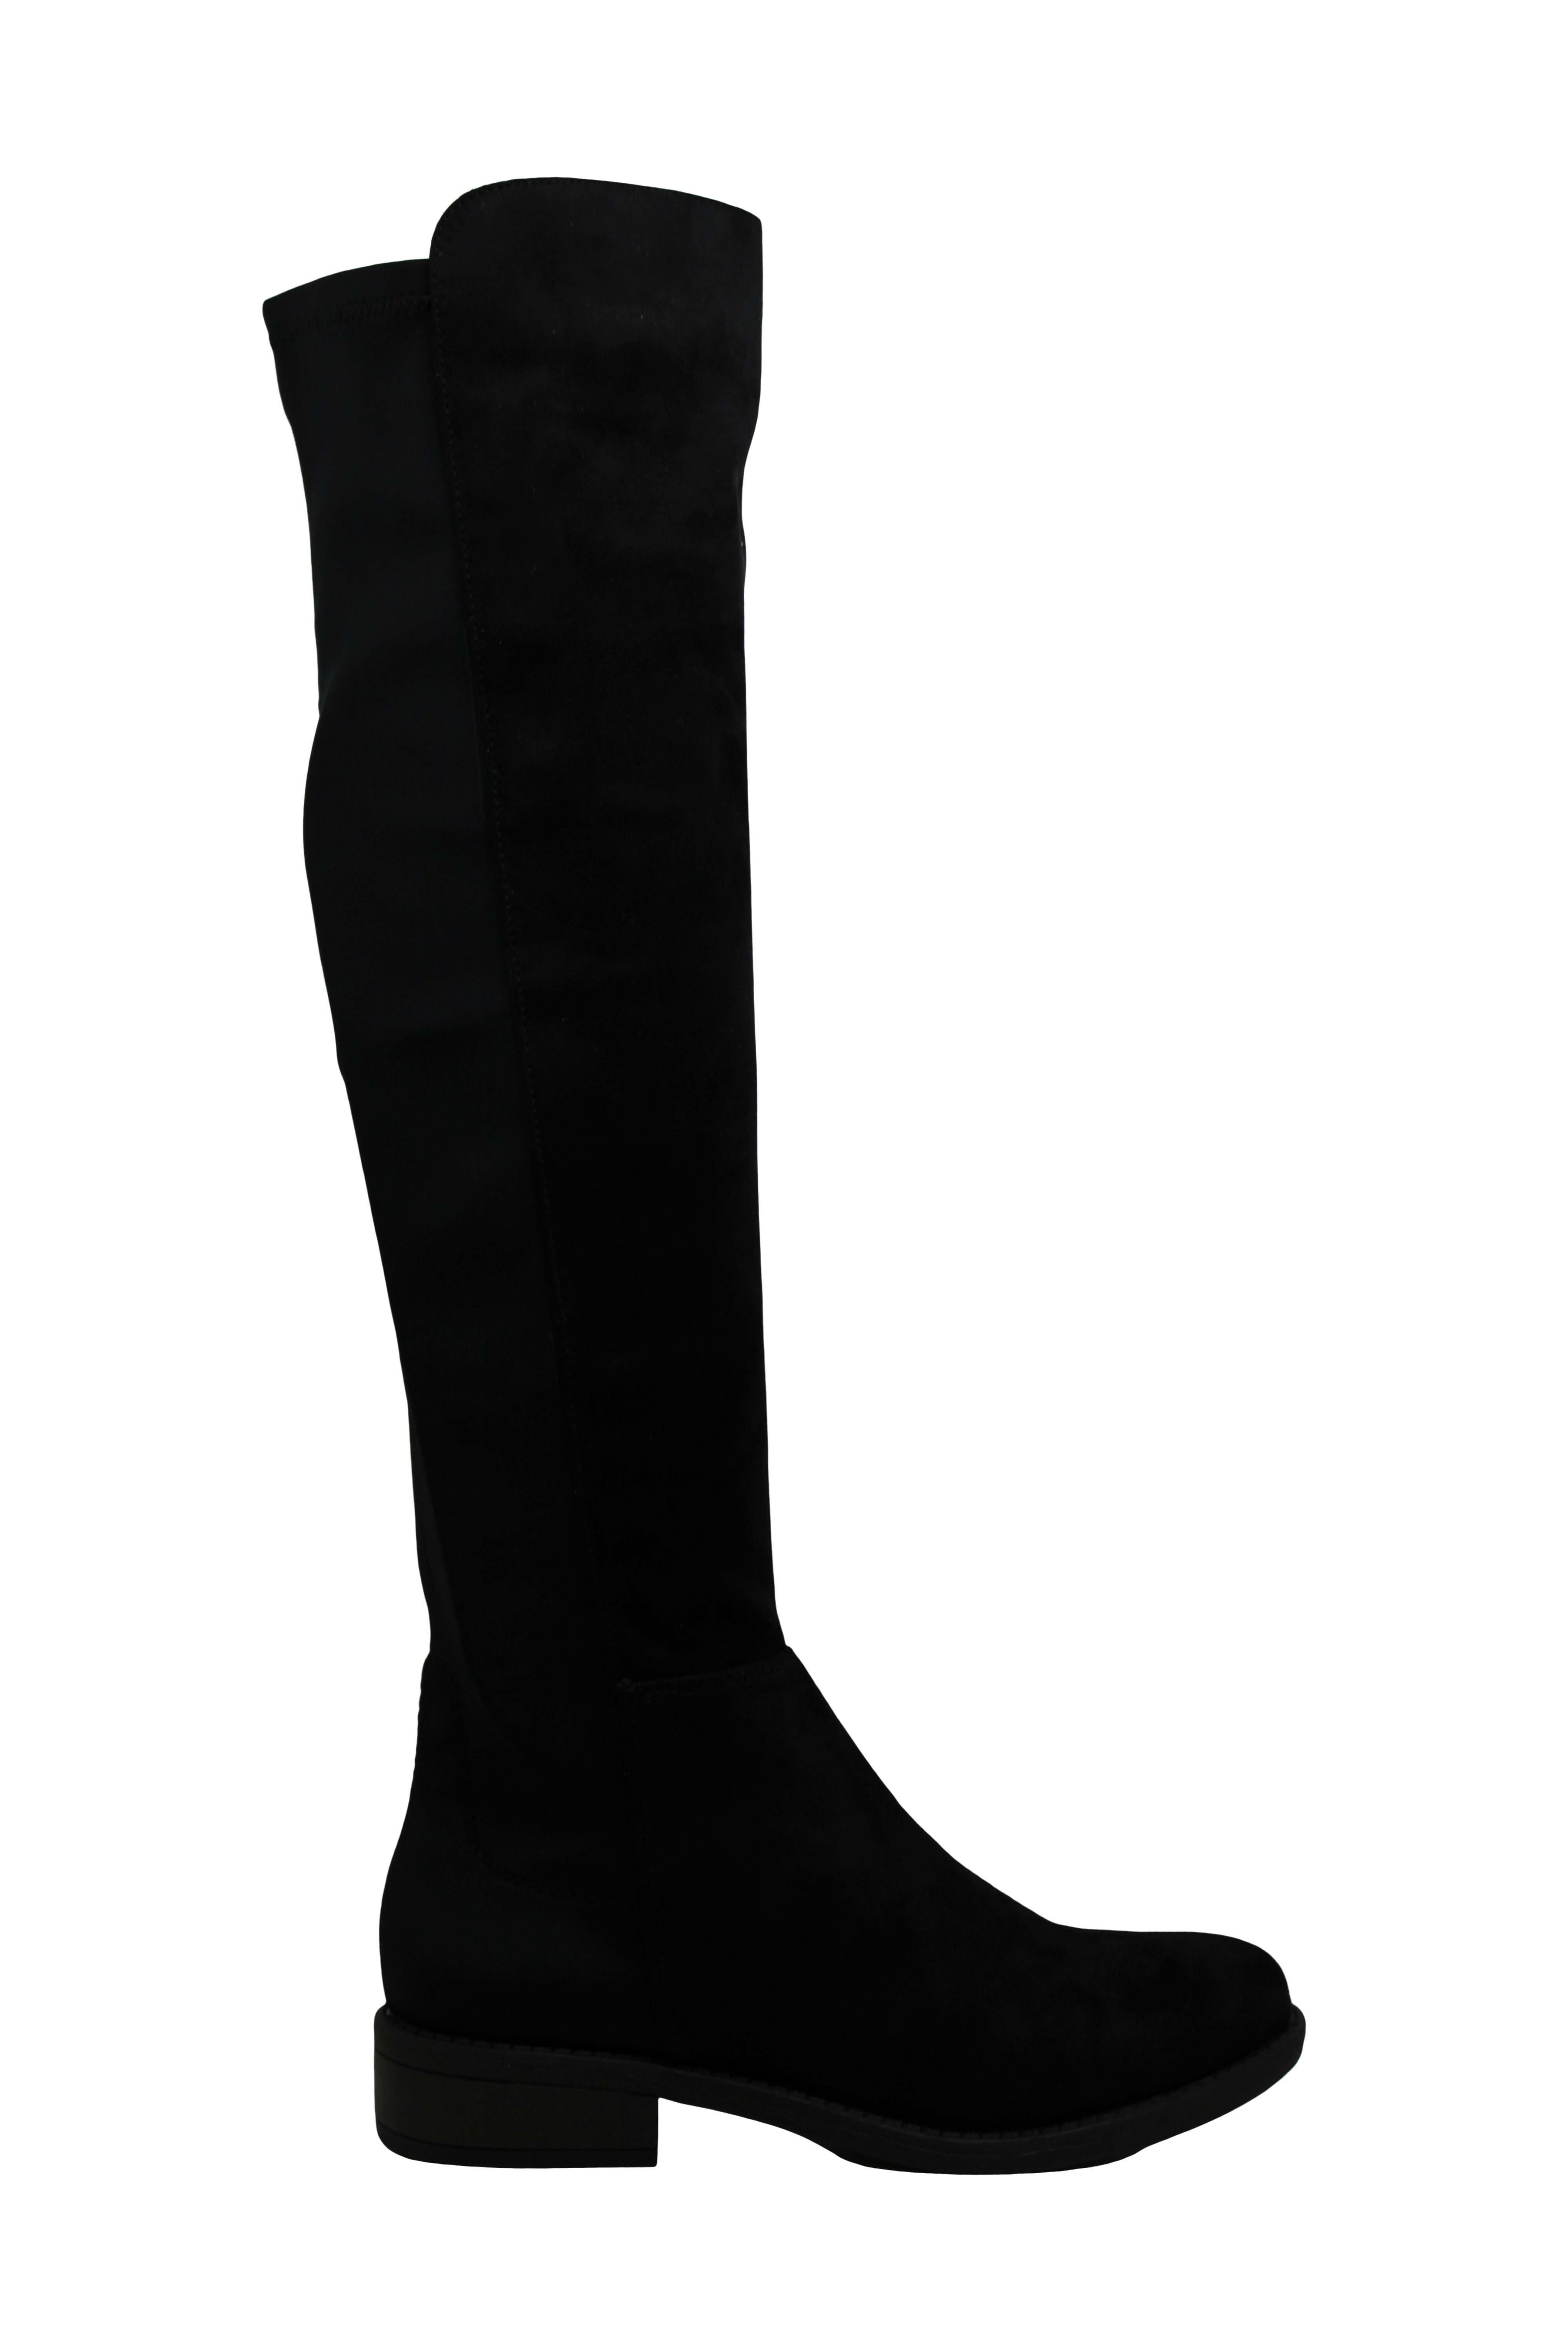 Zigi Soho Womens Boots in Black Color, Size 5.5 WXE 190047162585 | eBay